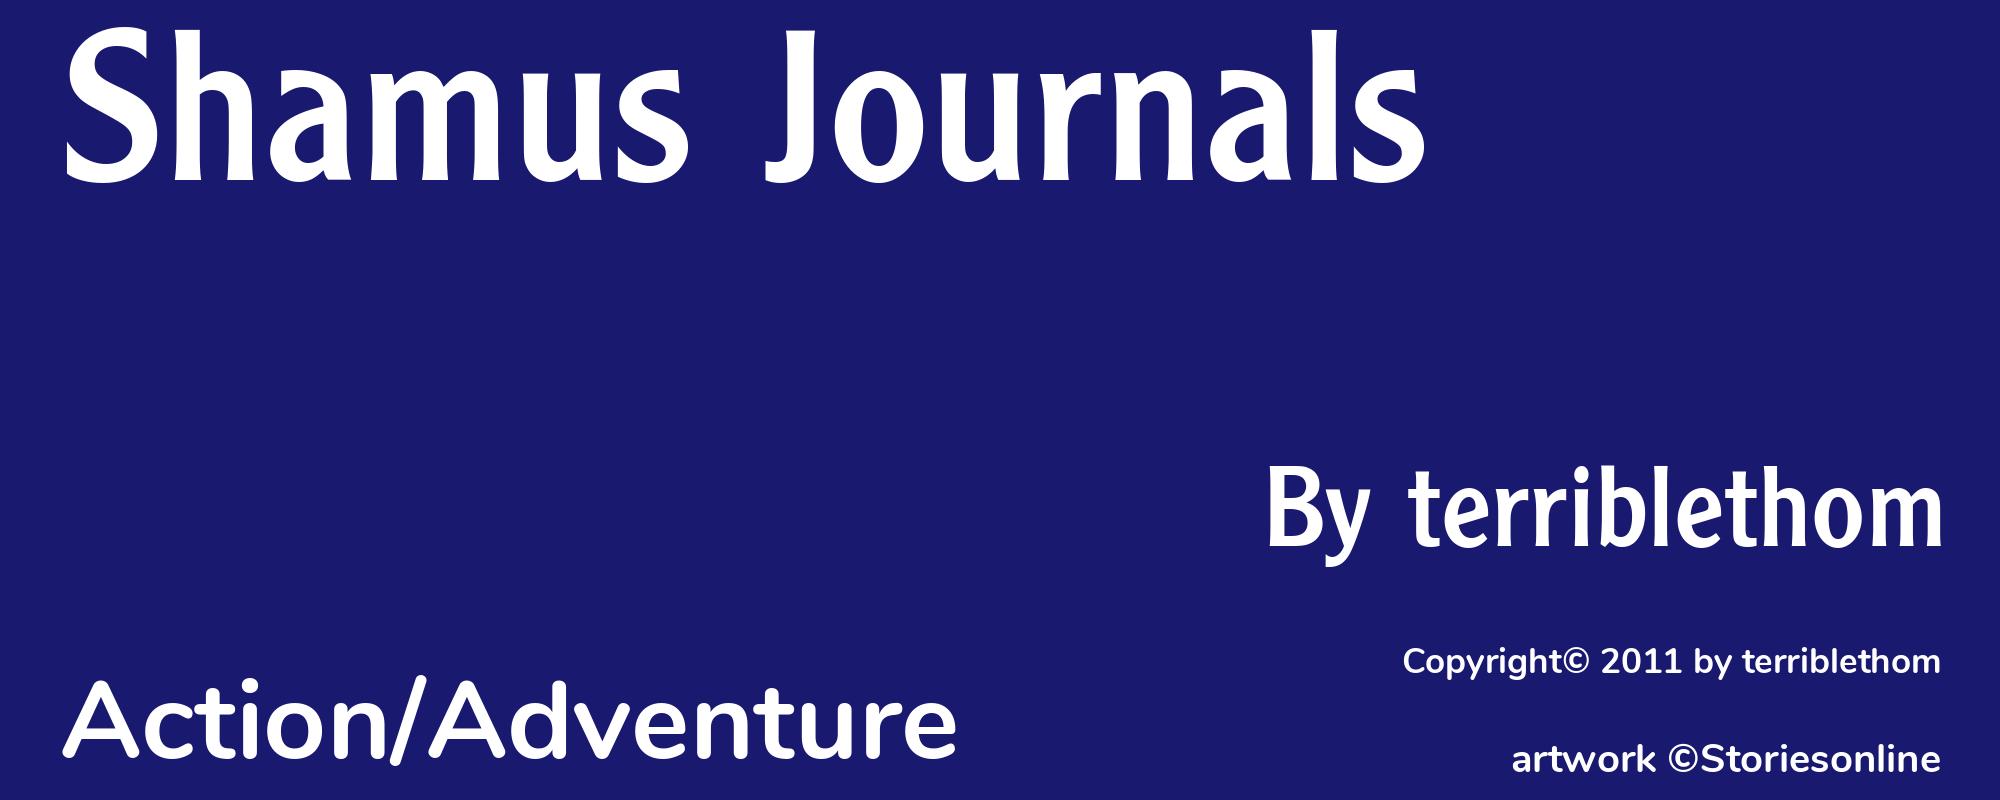 Shamus Journals - Cover